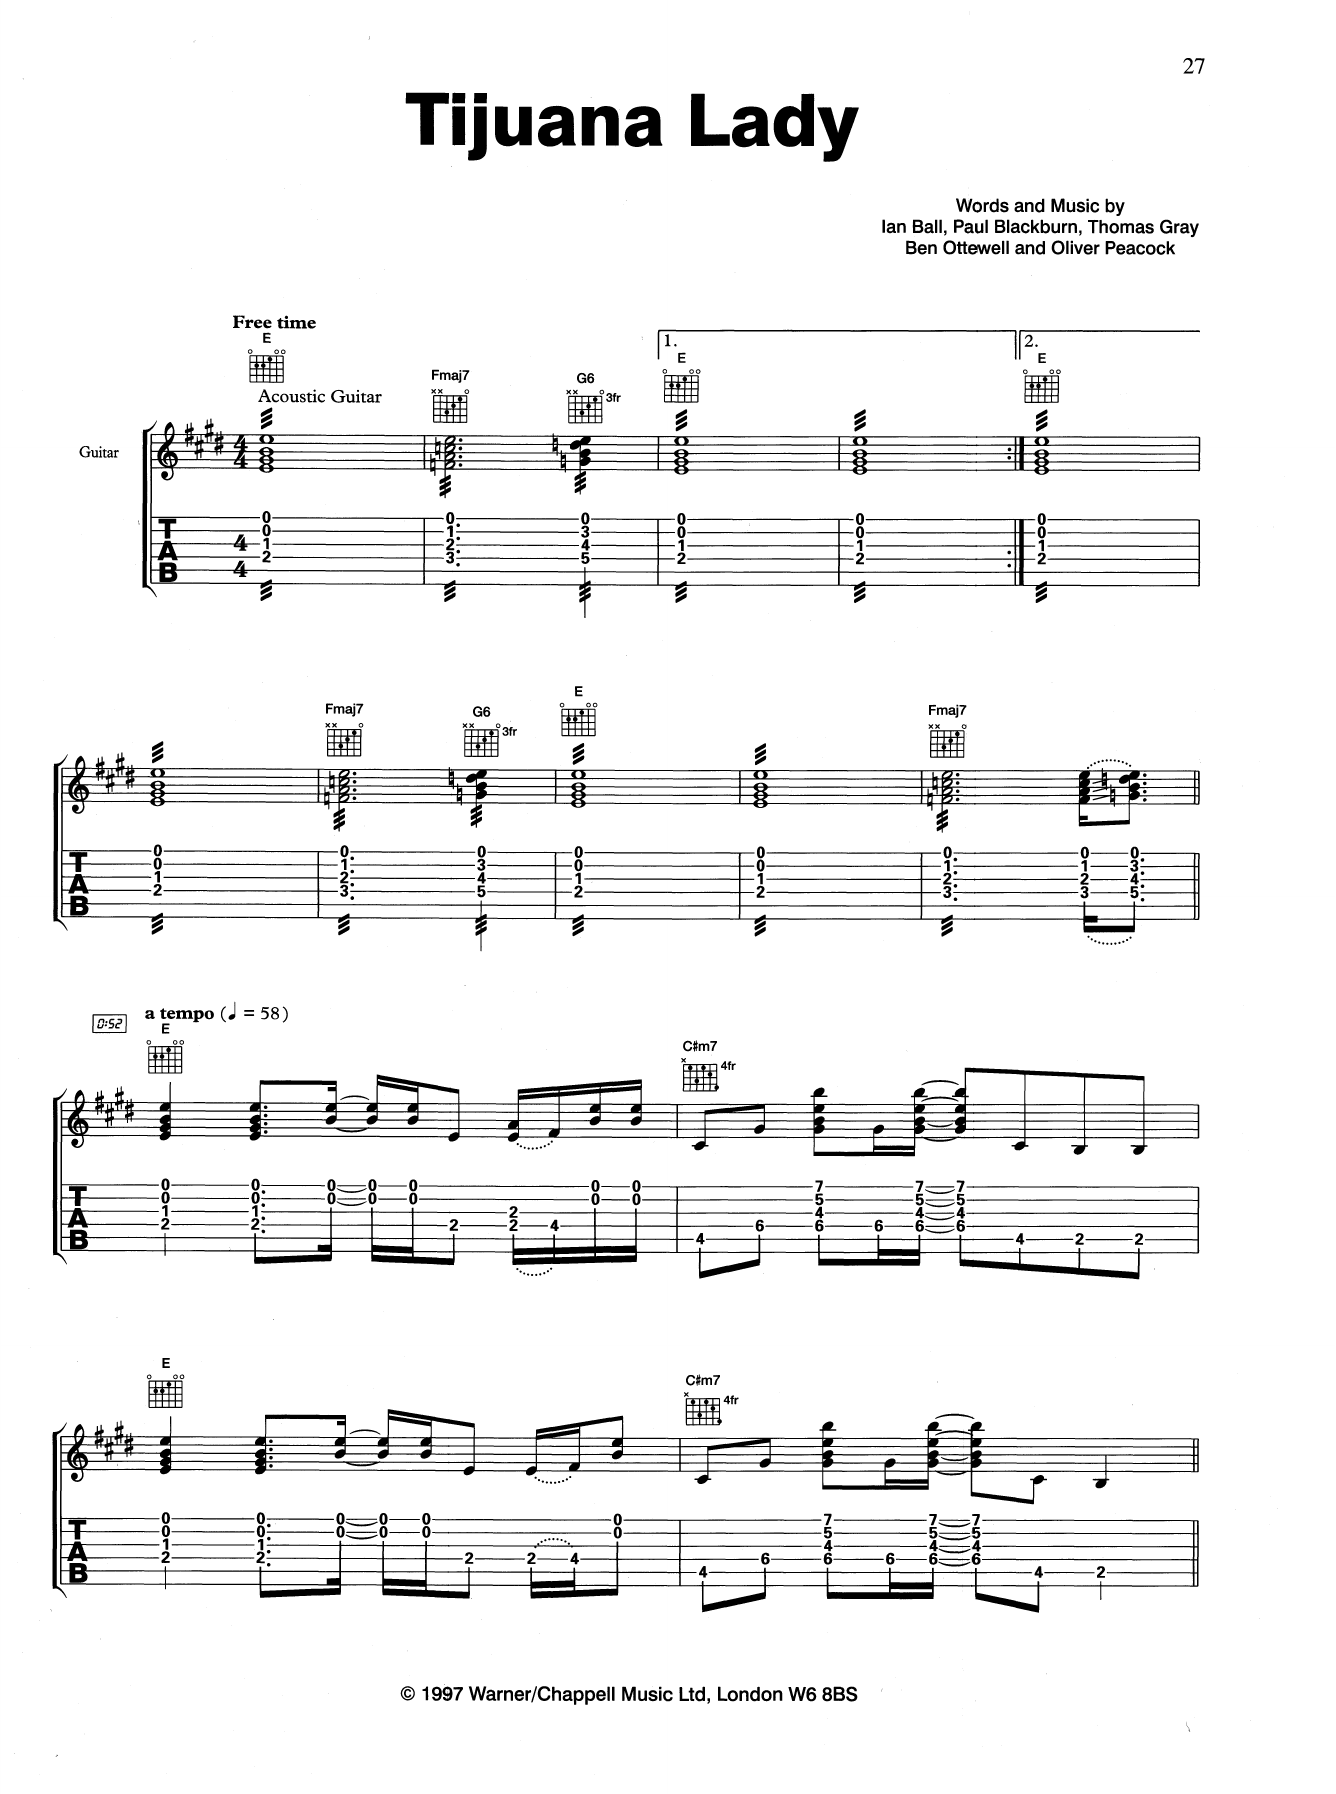 Gomez Tijuana Lady Sheet Music Notes & Chords for Guitar Tab - Download or Print PDF